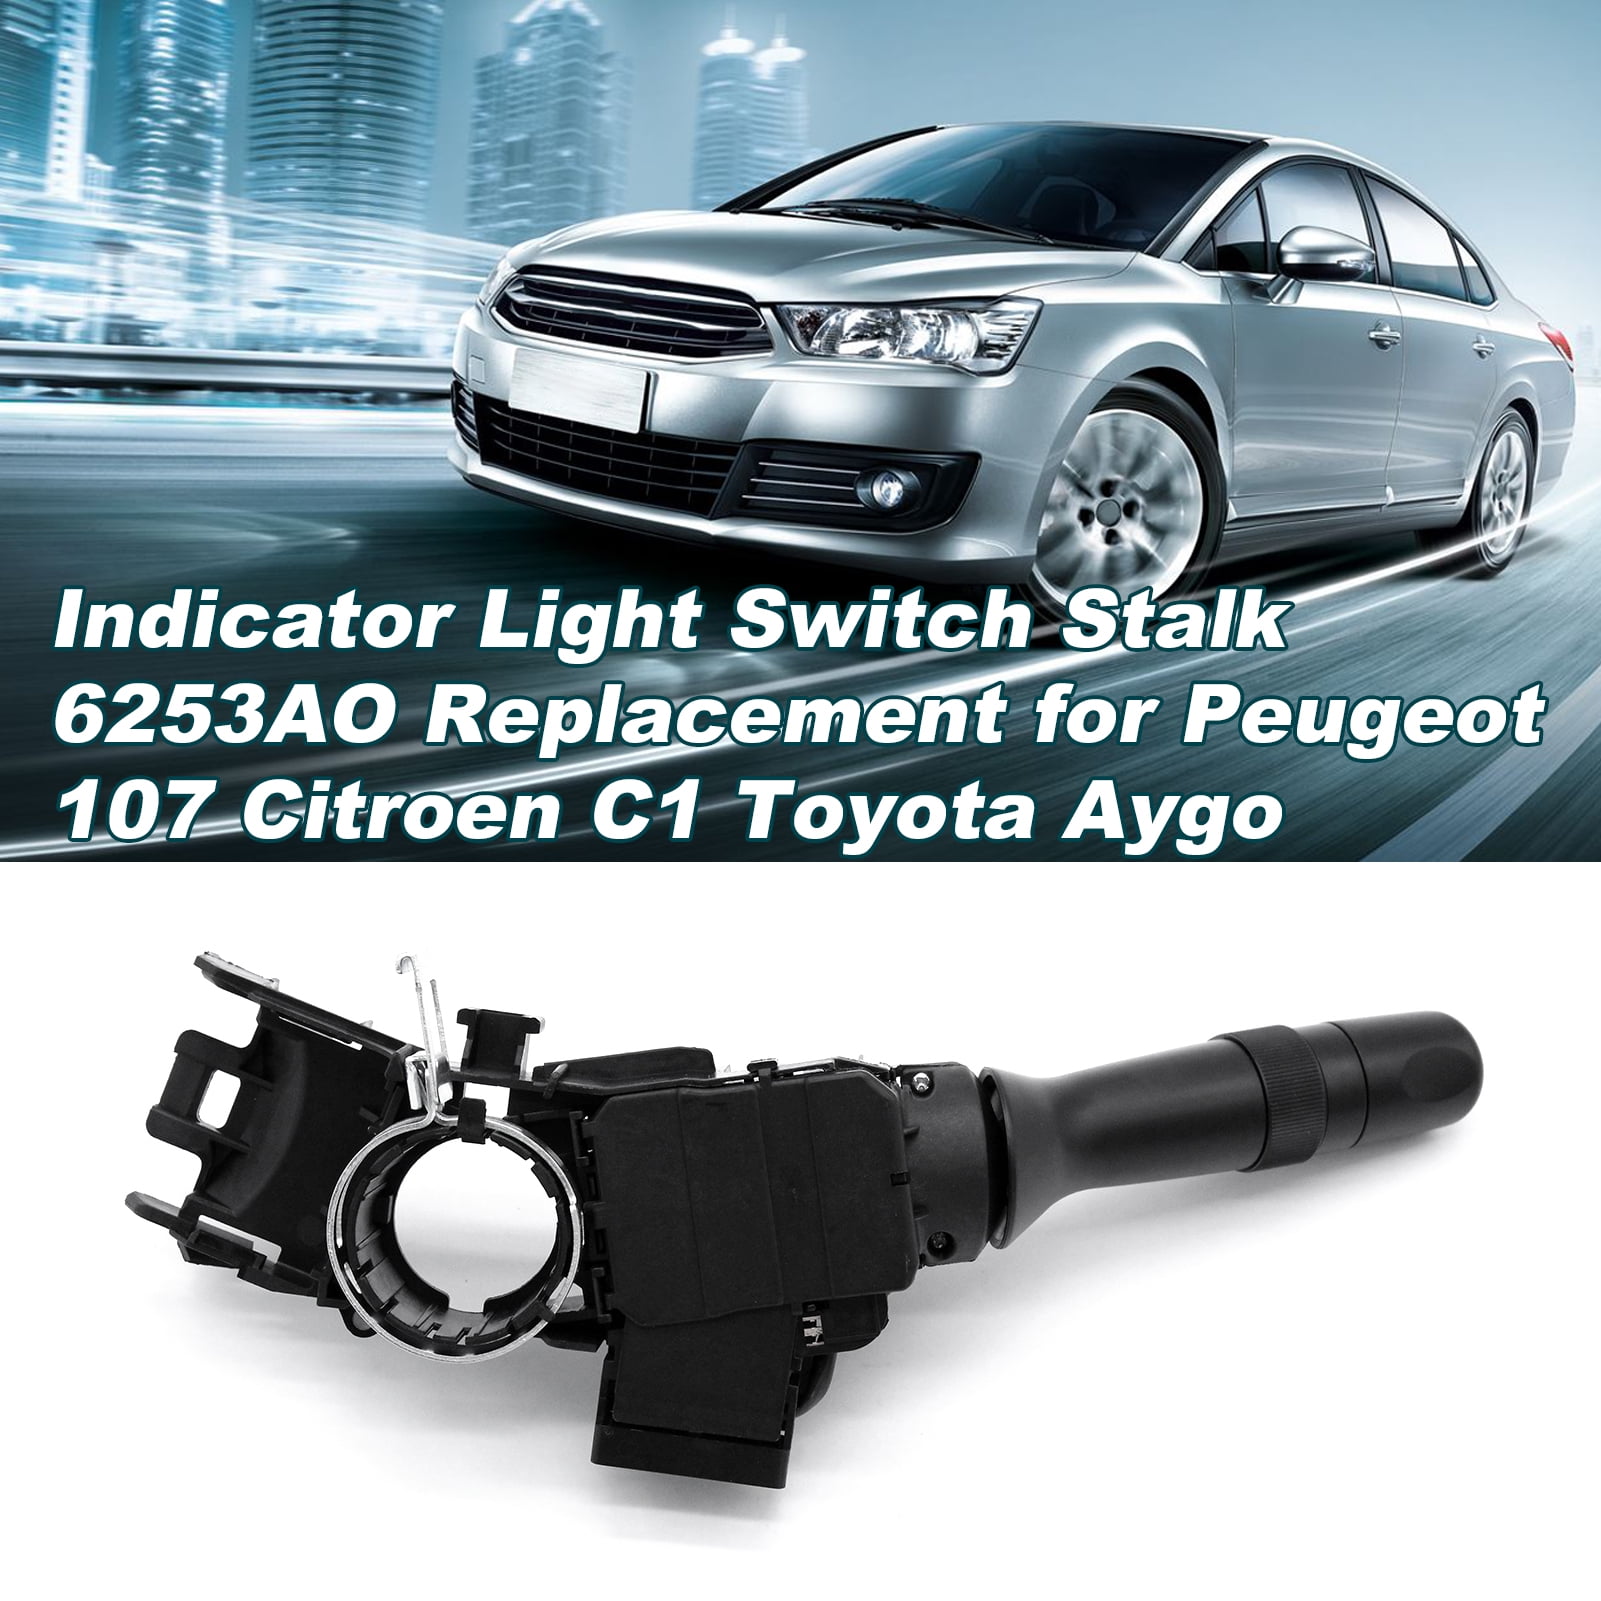 Indicator Light Switch Stalk Peugeot,Entweg Indicator Light Switch Stalk 6253AO Replacement for Peugeot 107 Citroen C1 Toyota Aygo